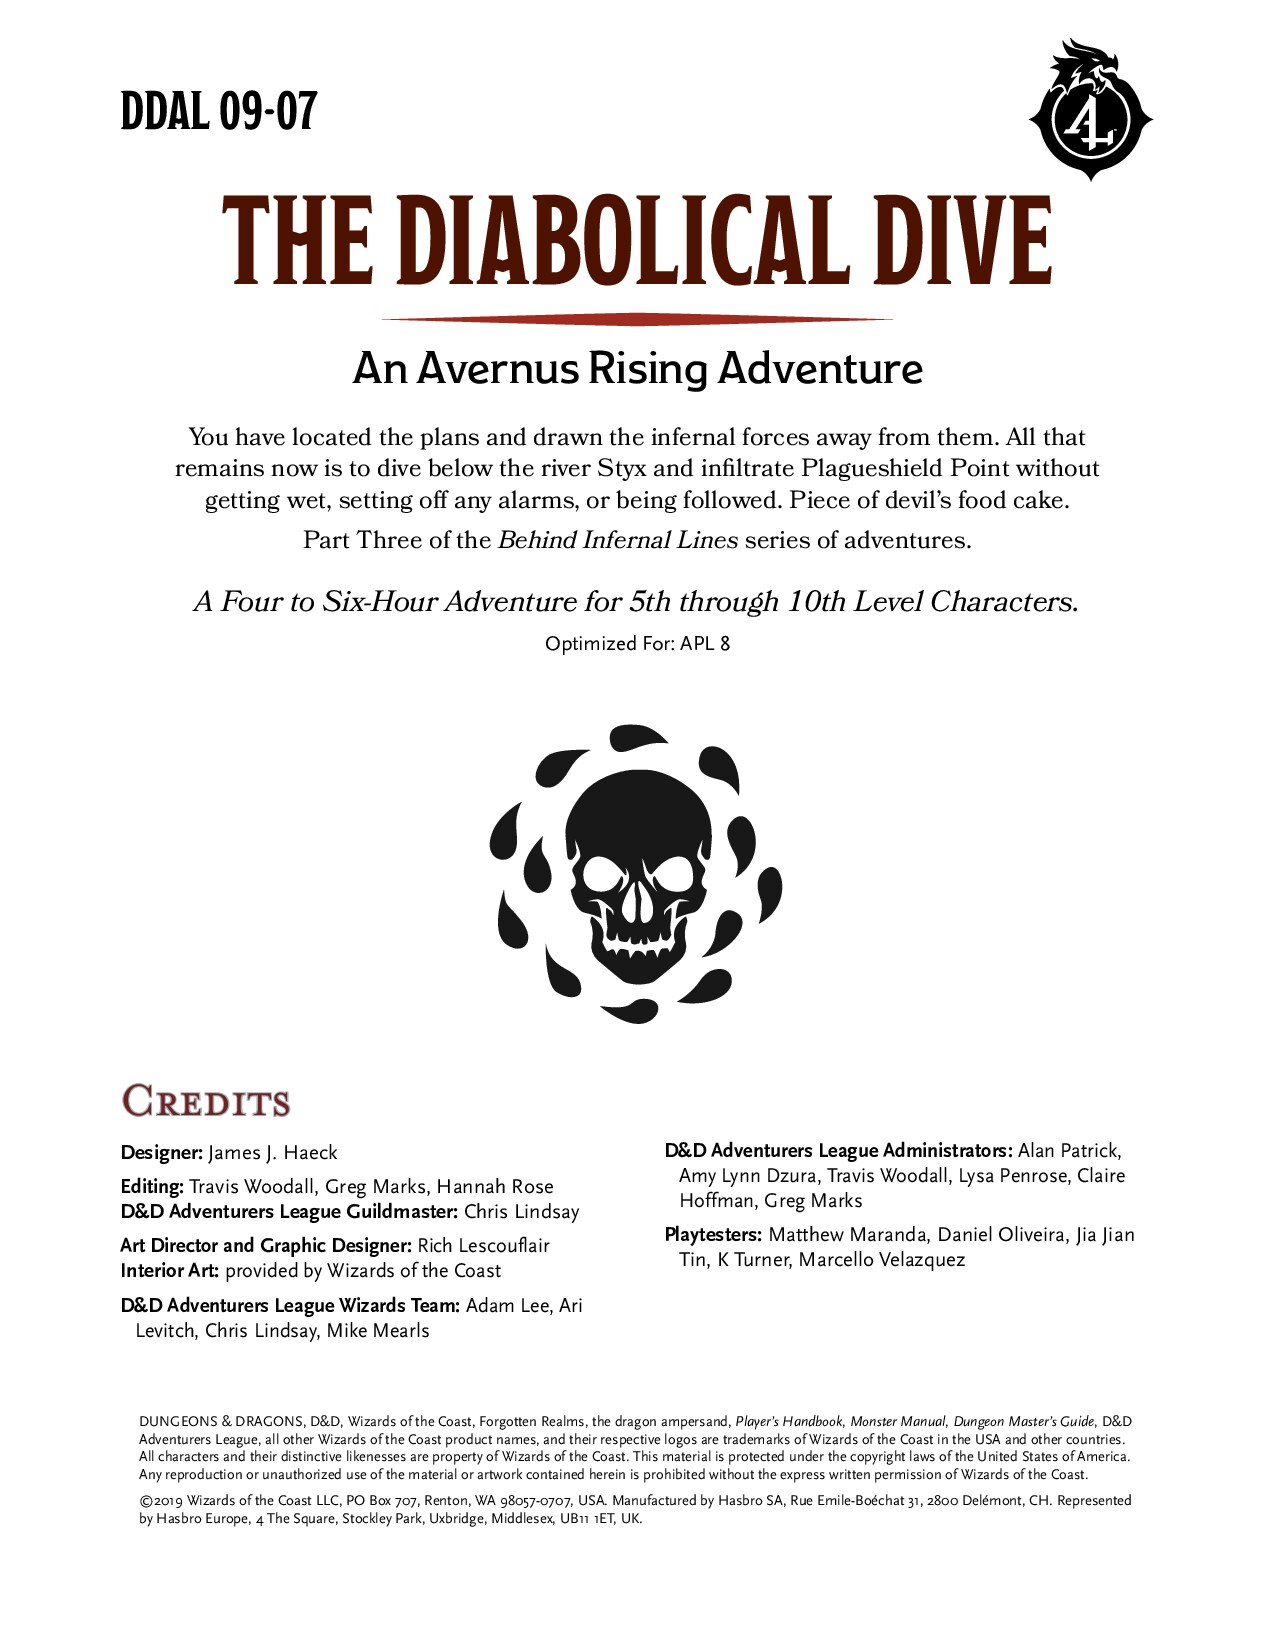 DDAL09-07 - The Diabolical Dive